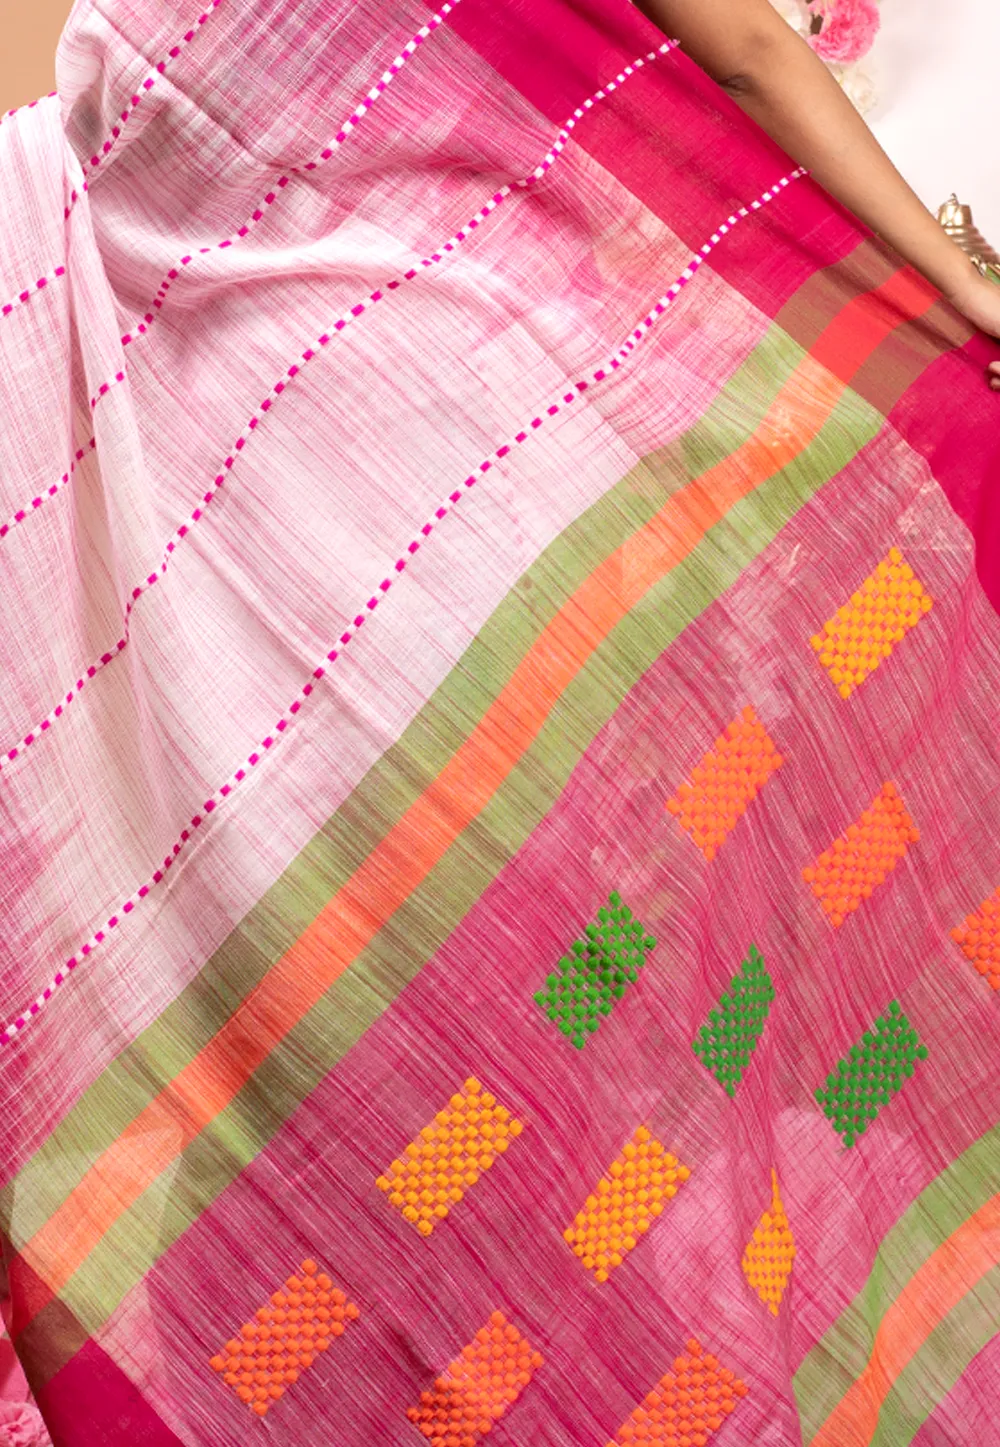 offwhite handloom saree with contrasting border multicolor motifs 602126f1bafb4 1612785393